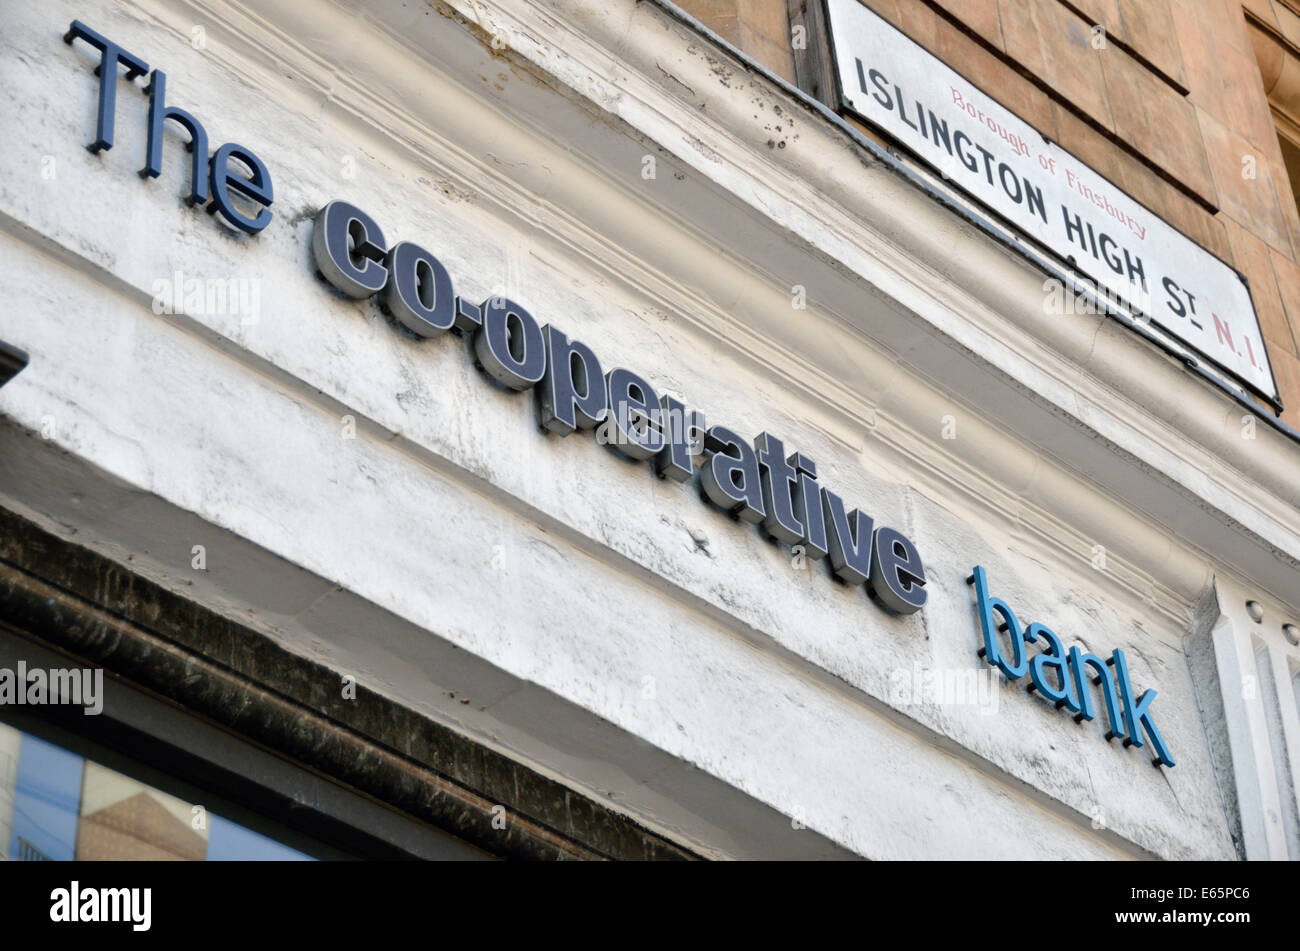 Dilapidated Co-operative Bank sign, Islington, London, UK. Stock Photo